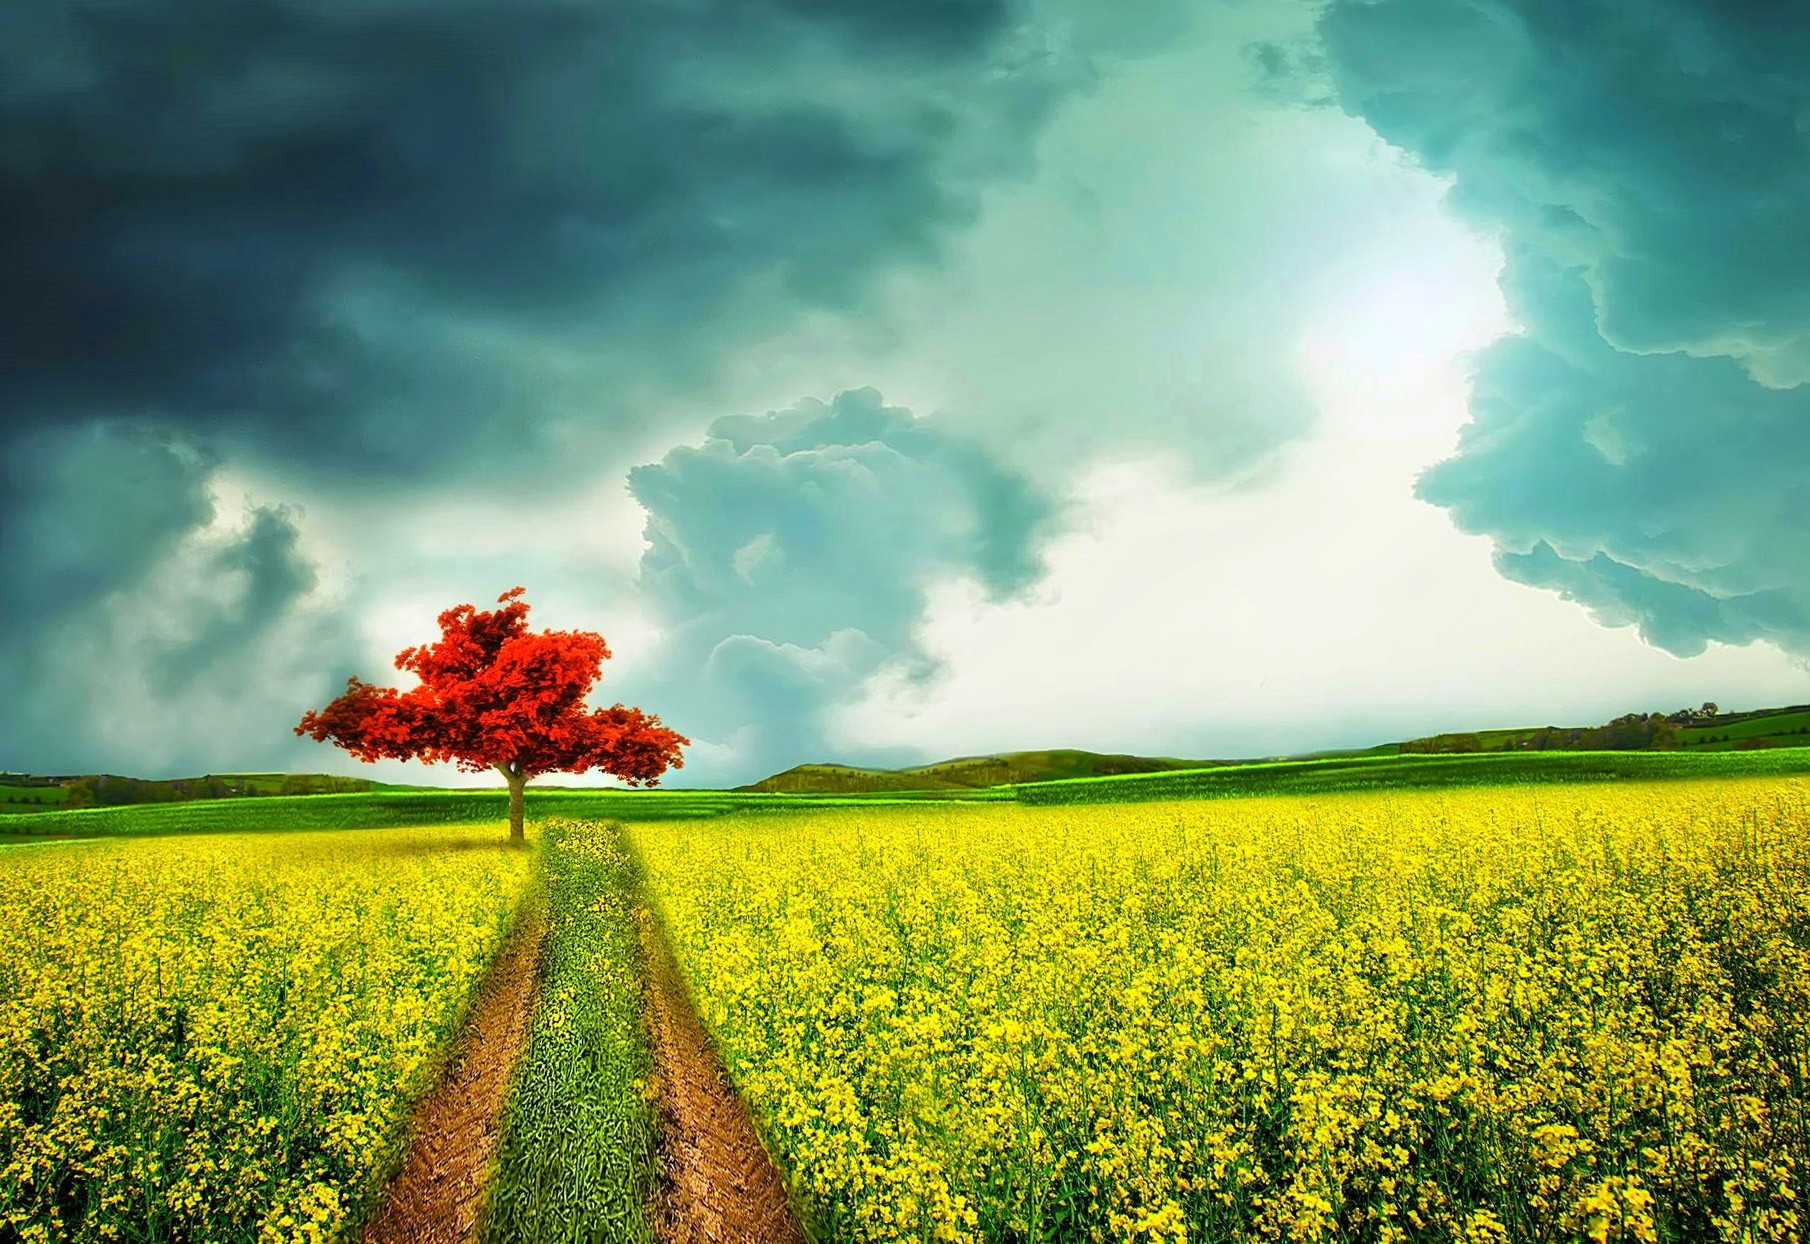 Nature Wallpapers, Hd Desktop Images, Sky, Landscape, - Field - HD Wallpaper 